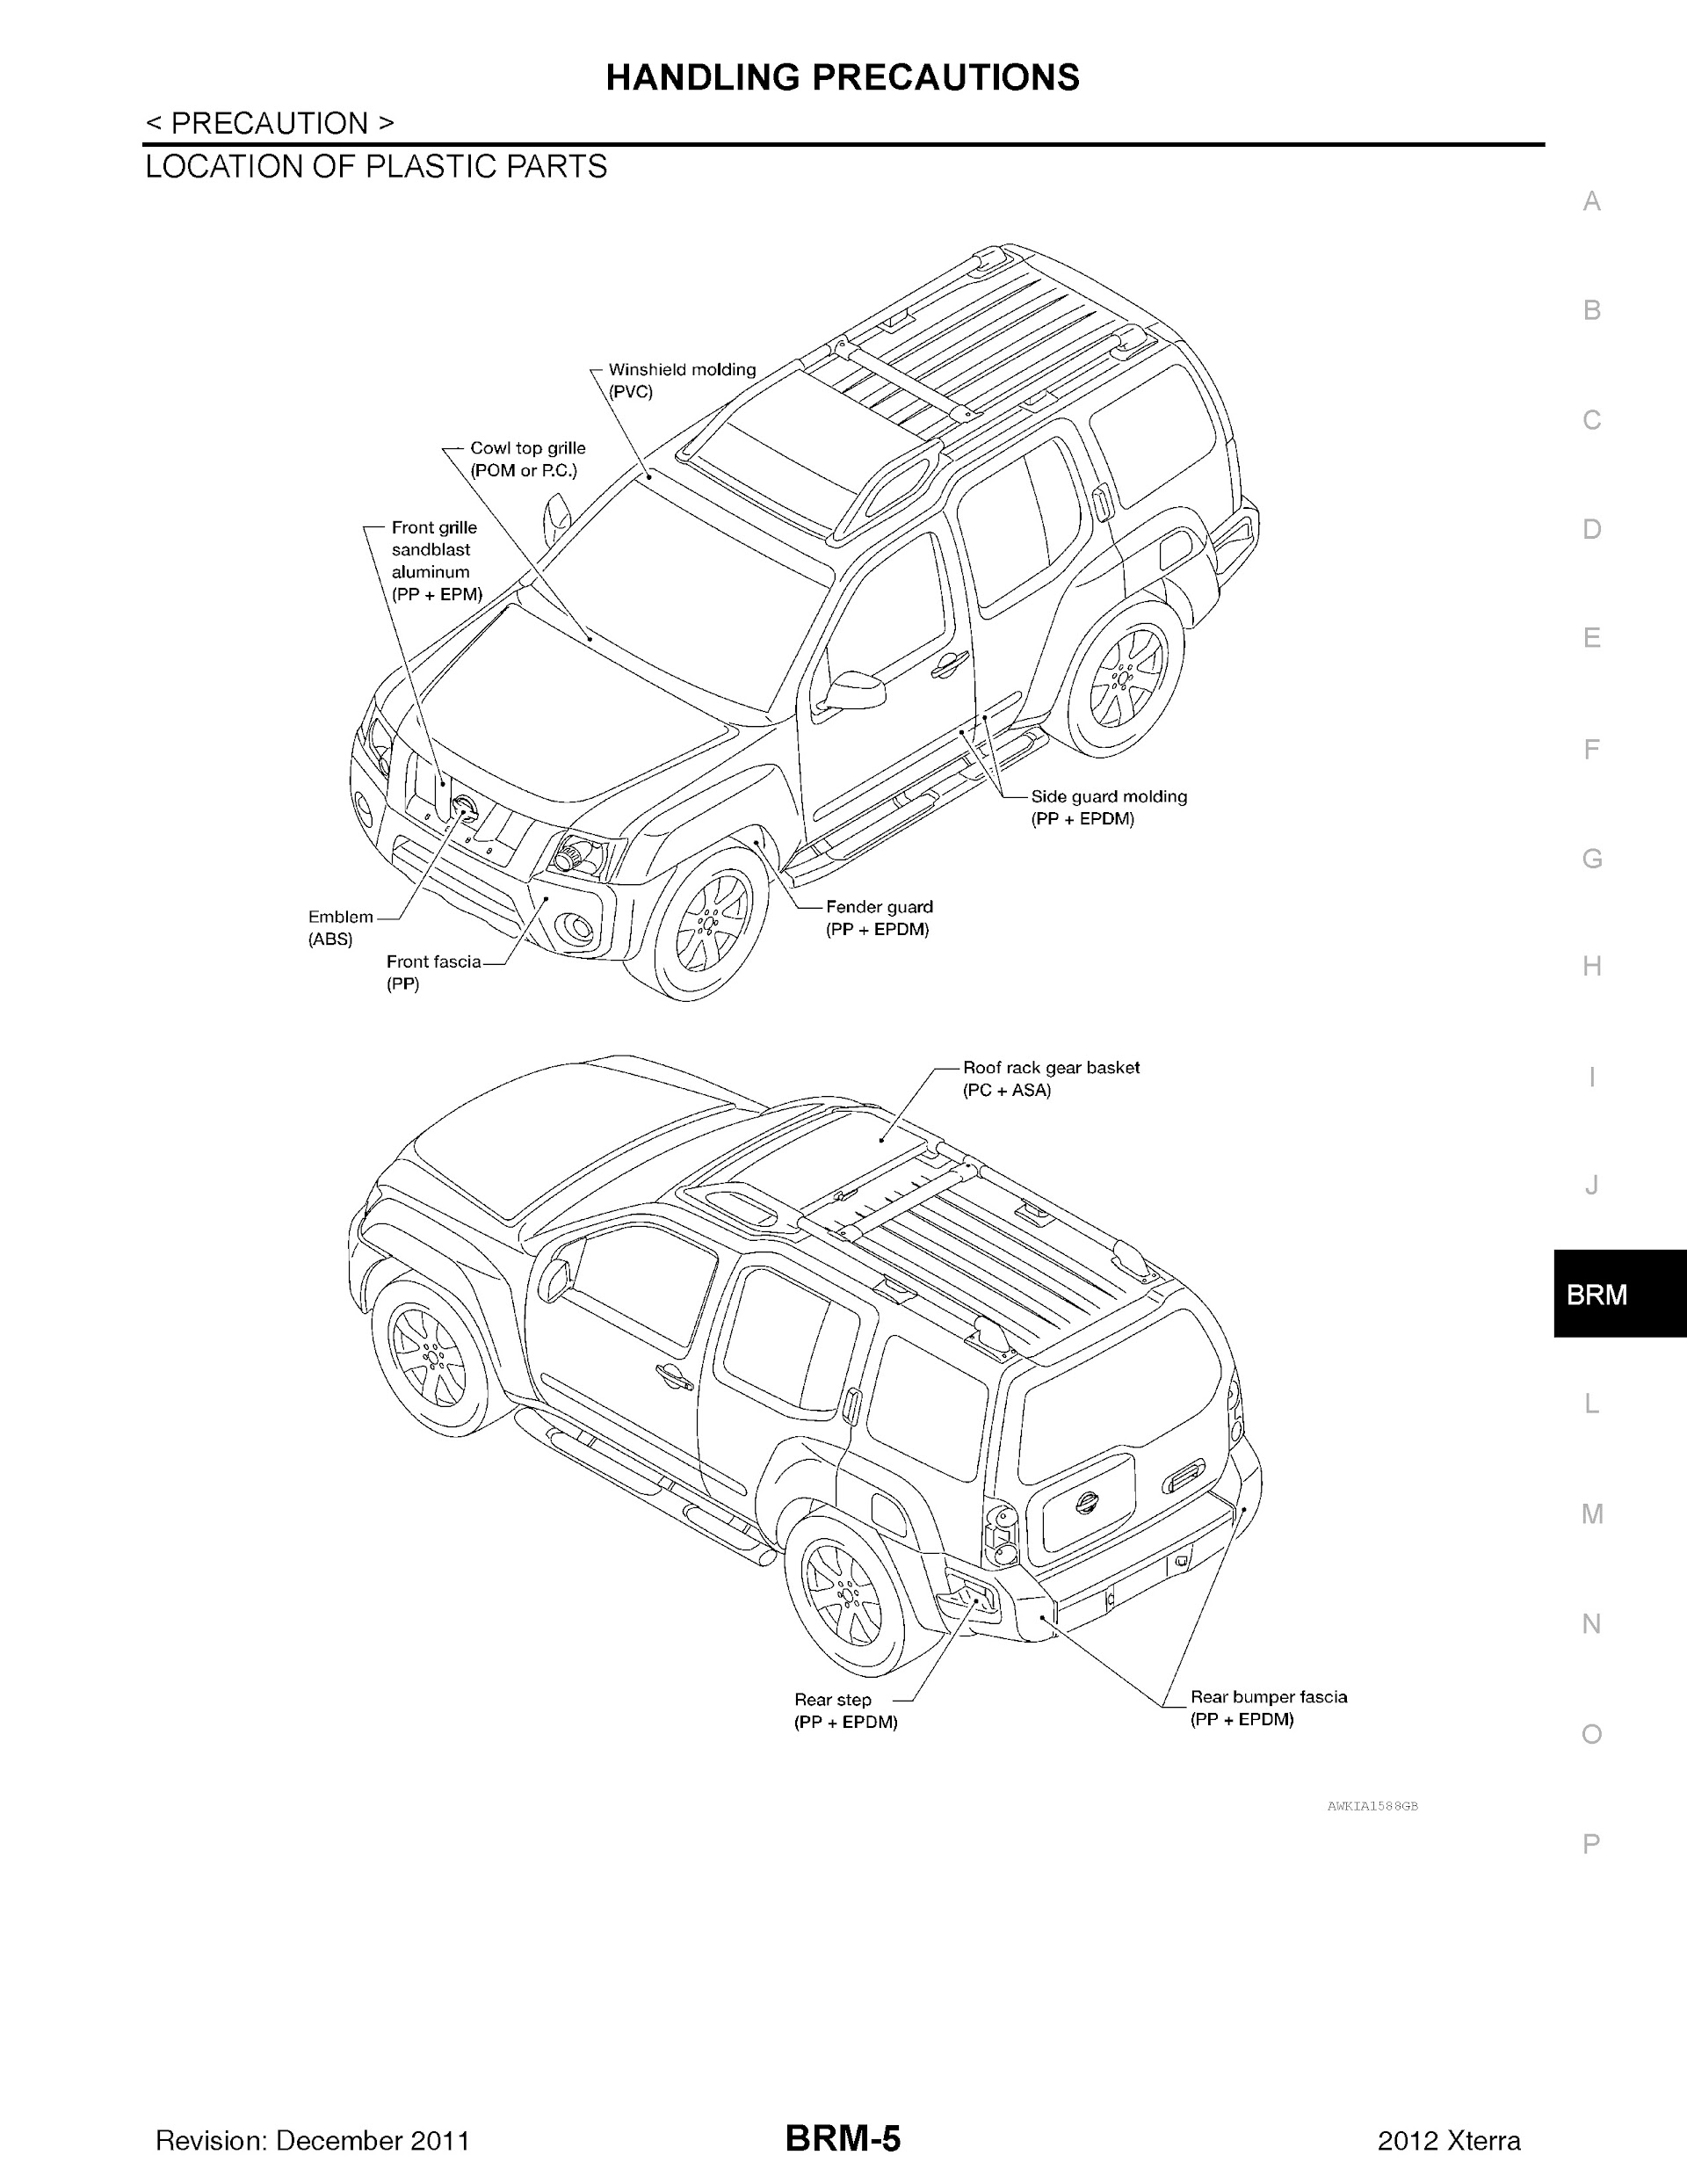 2012 Nissan XTerra Repair Manual